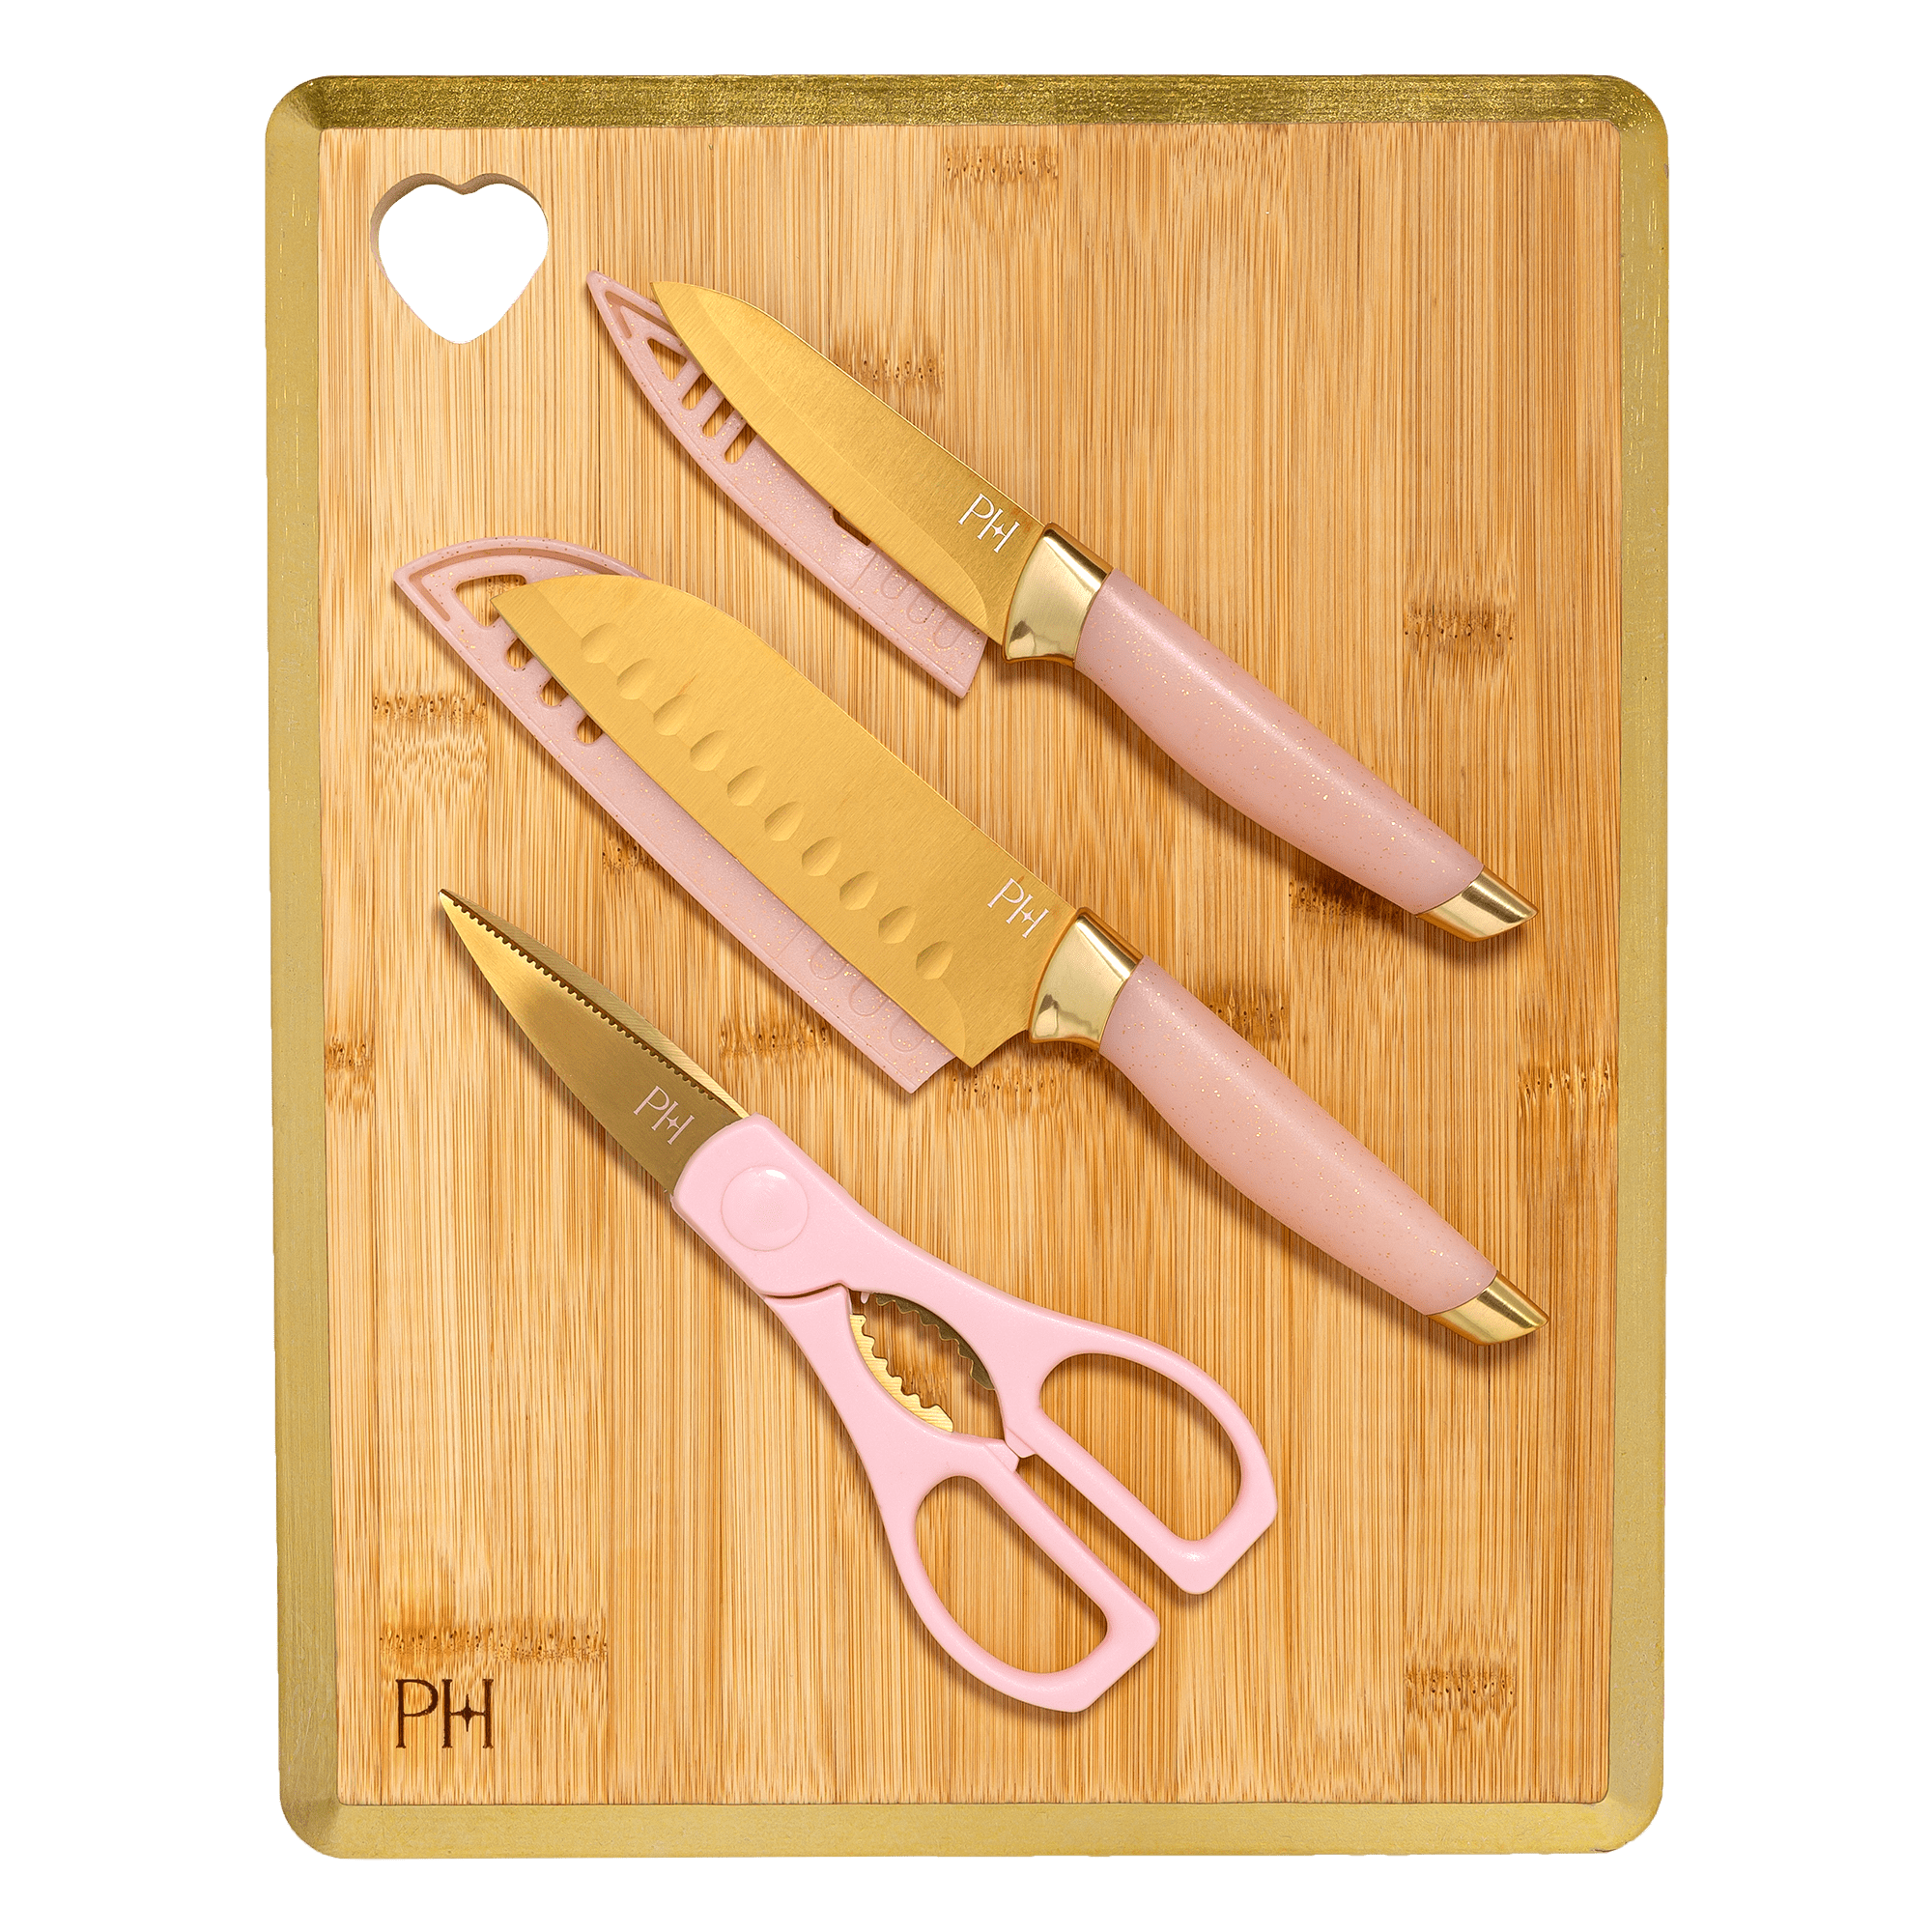 Paris Hilton kitchen Knife Set #parishilton #kitchen #pov  #barbiedreamhouuse #pinkkitchen #walmart 